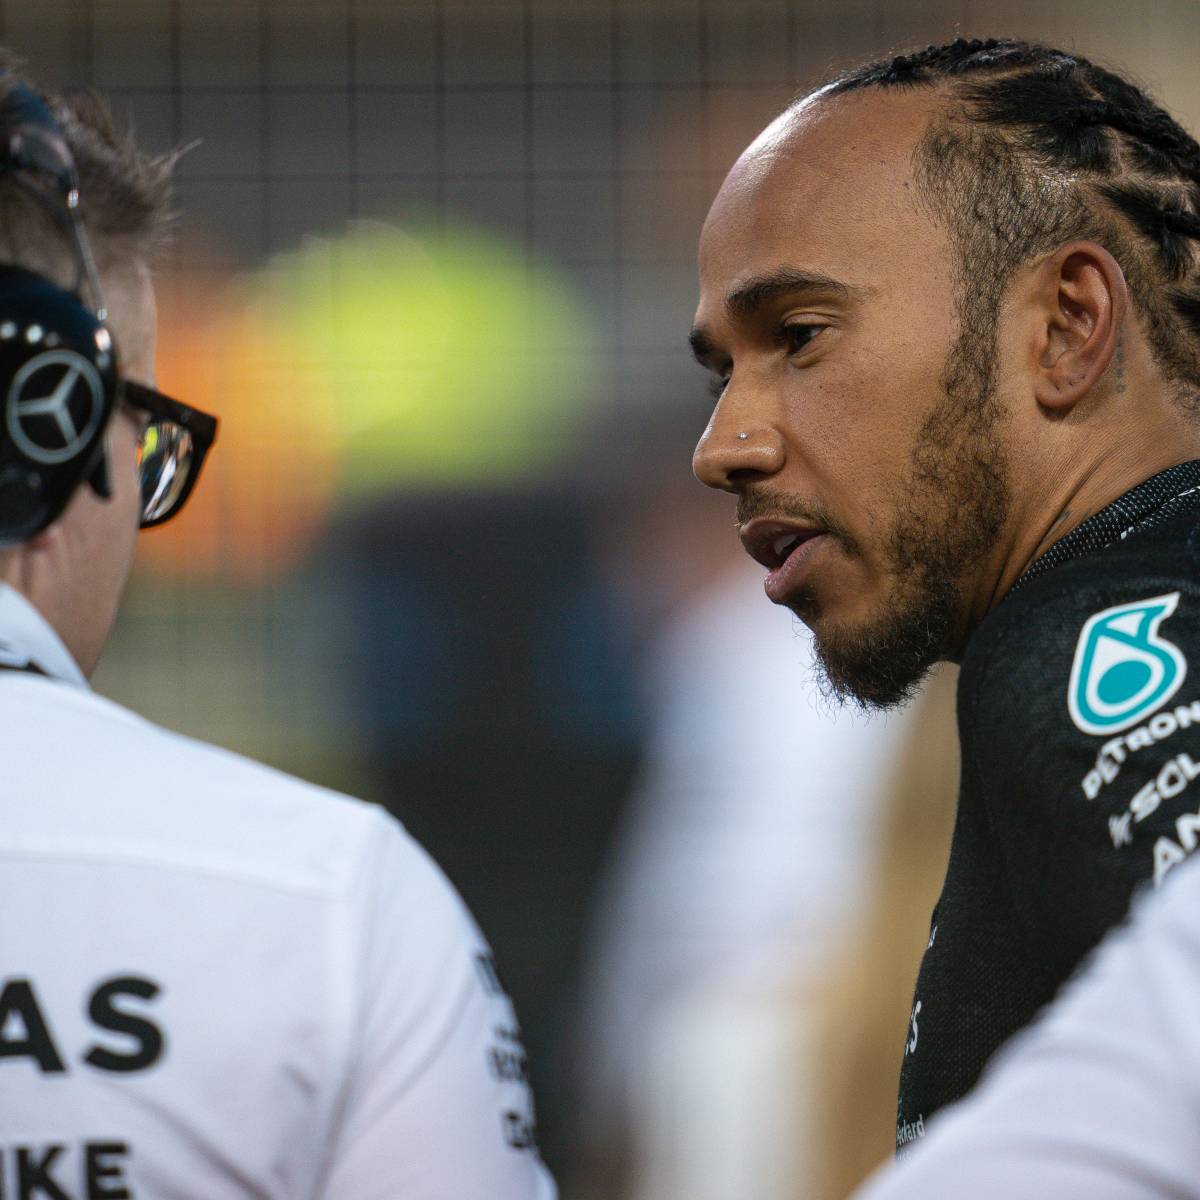 Formel 1: Nach Start-Desaster – rückt Hamiltons Vertragsverlängerung in weite Ferne?